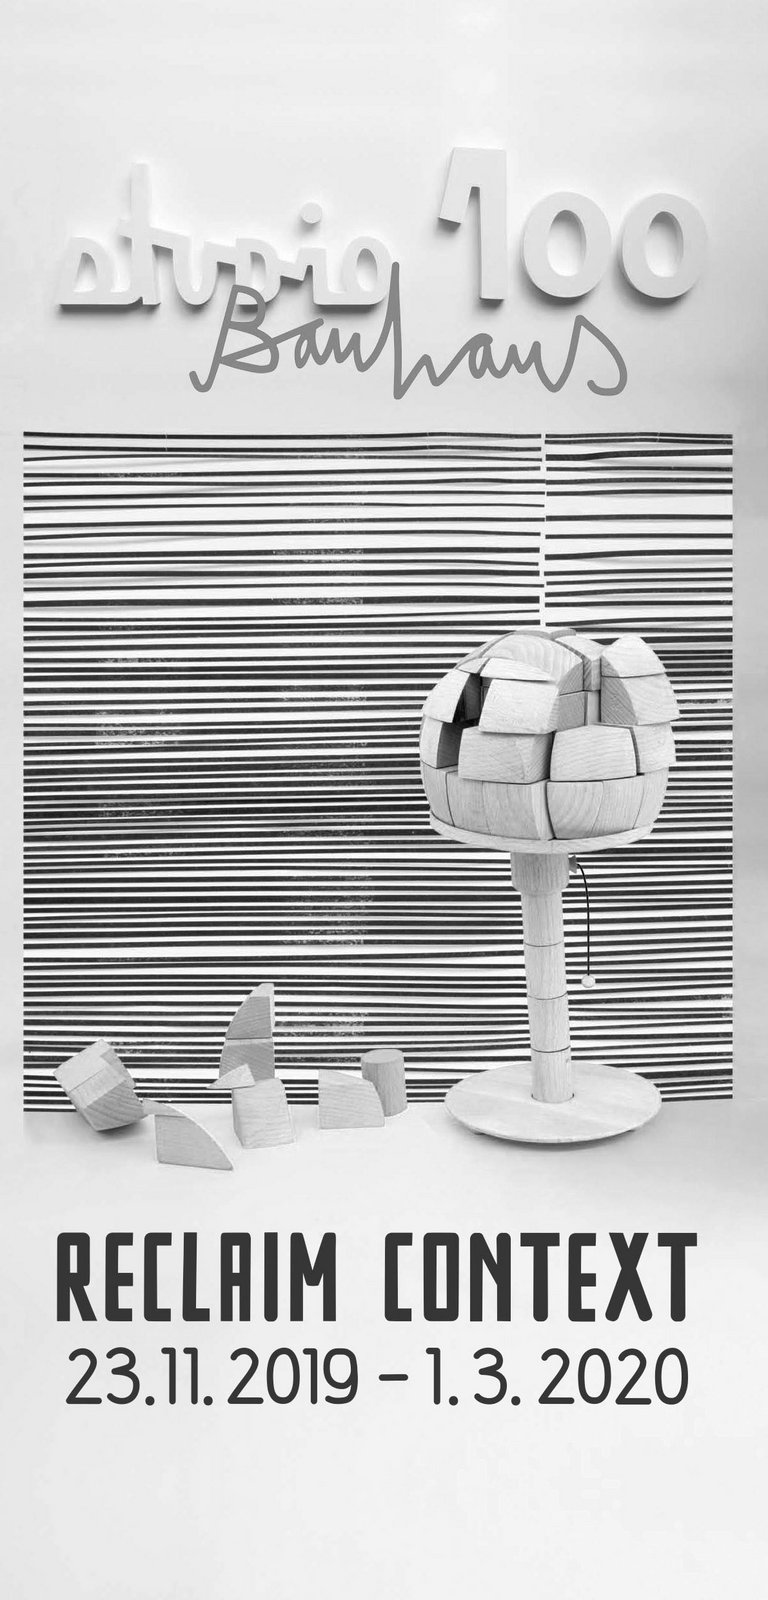 Ausstellungsplakat »Reclaim Context« / Studio Bauhaus 100